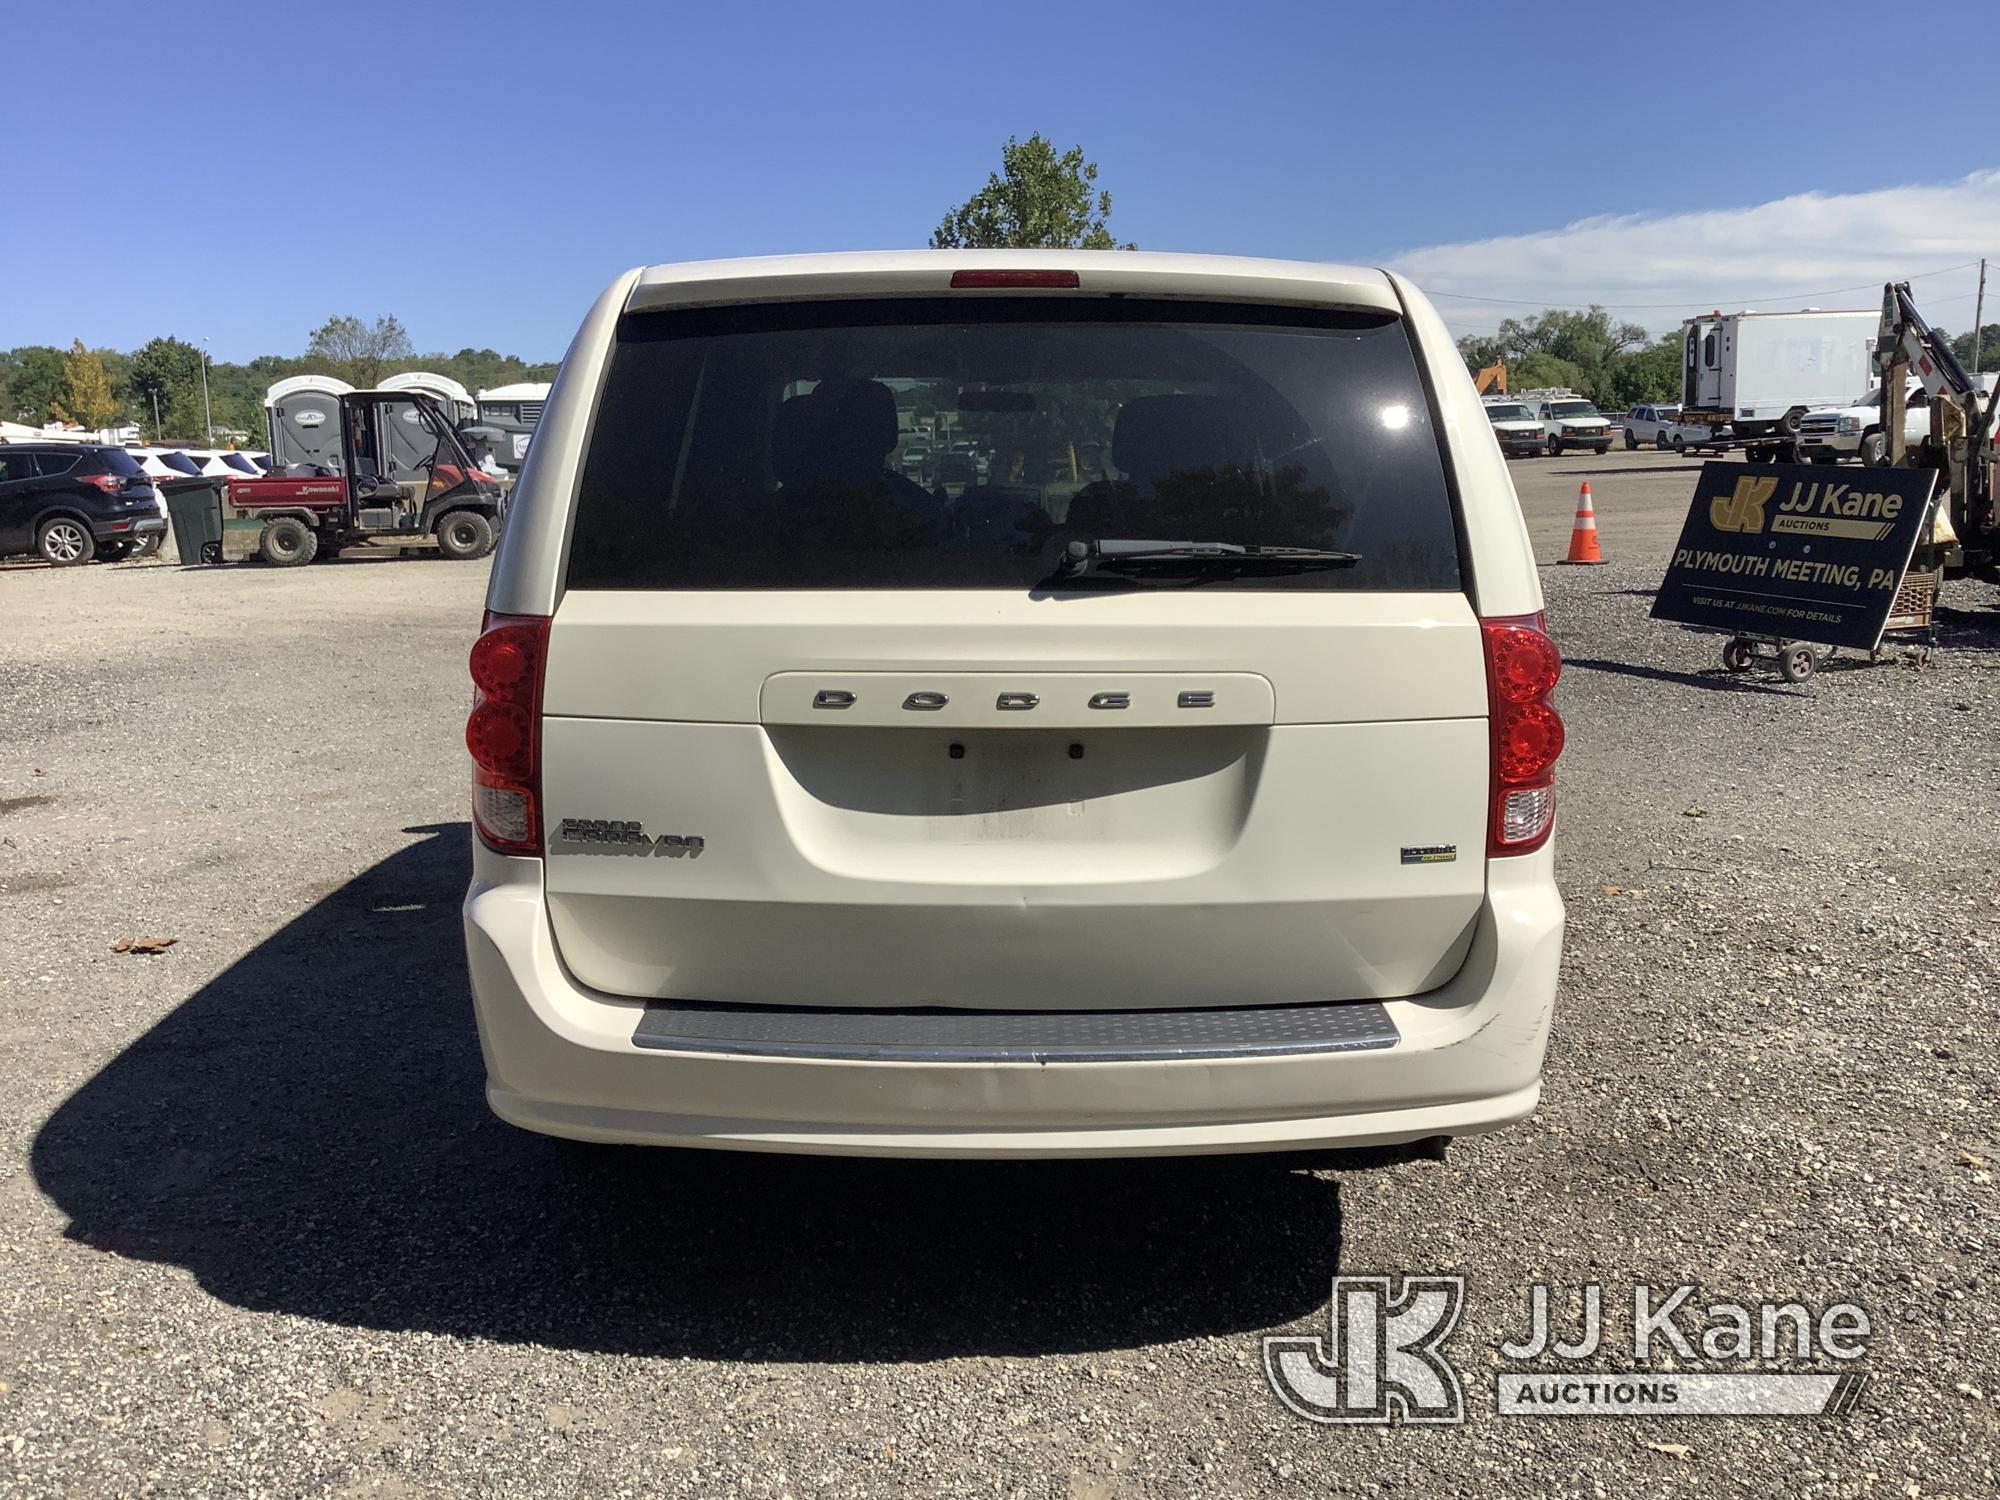 (Plymouth Meeting, PA) 2013 Dodge Grand Caravan Mini Passenger Van Runs & Moves, Body & Rust Damage